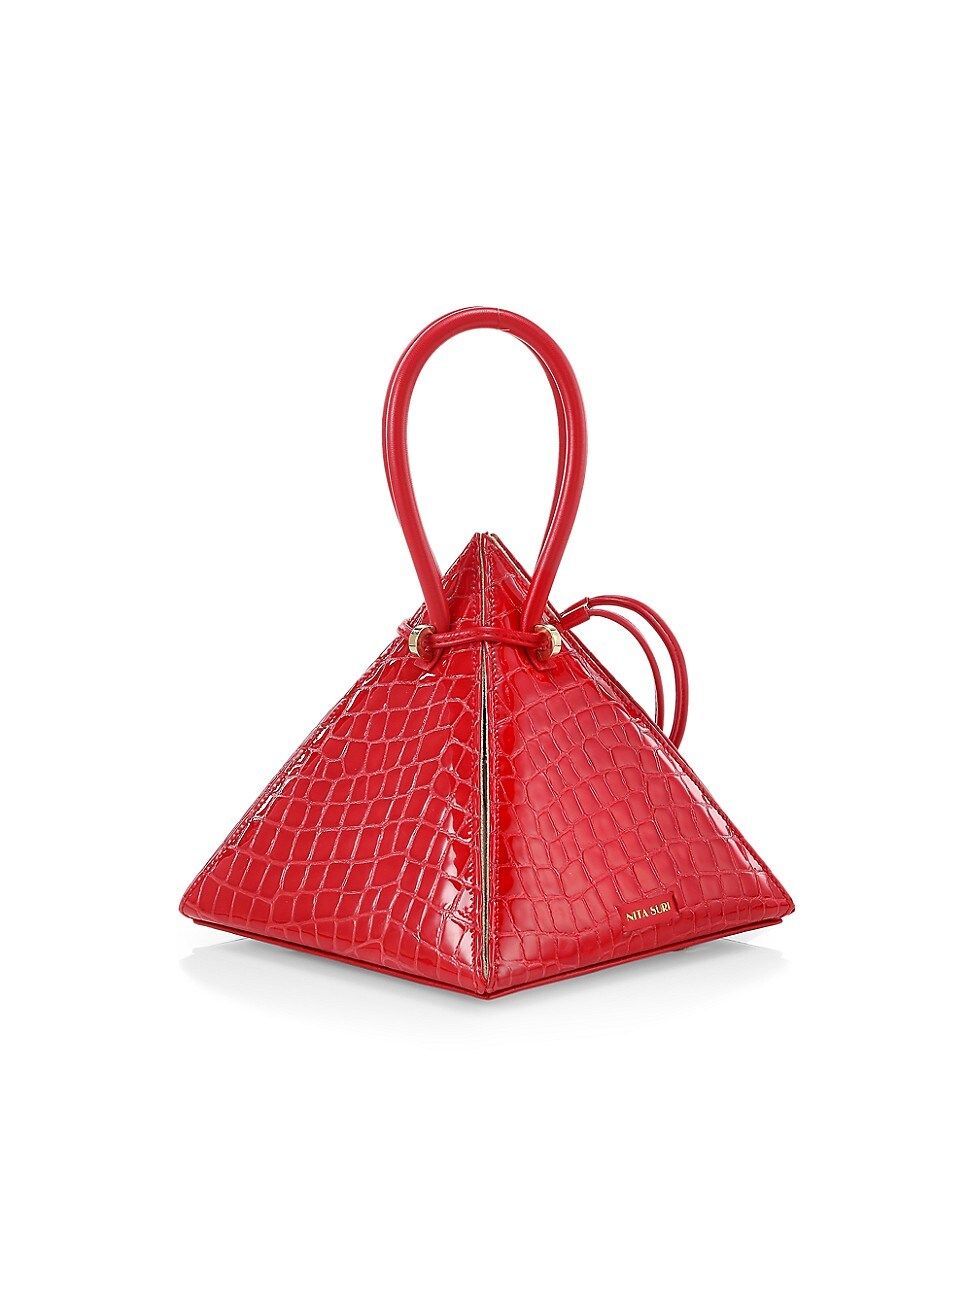 Nita Suri Women's Lia Croc-Embossed Leather Pyramid Top Handle Bag - Red | Saks Fifth Avenue